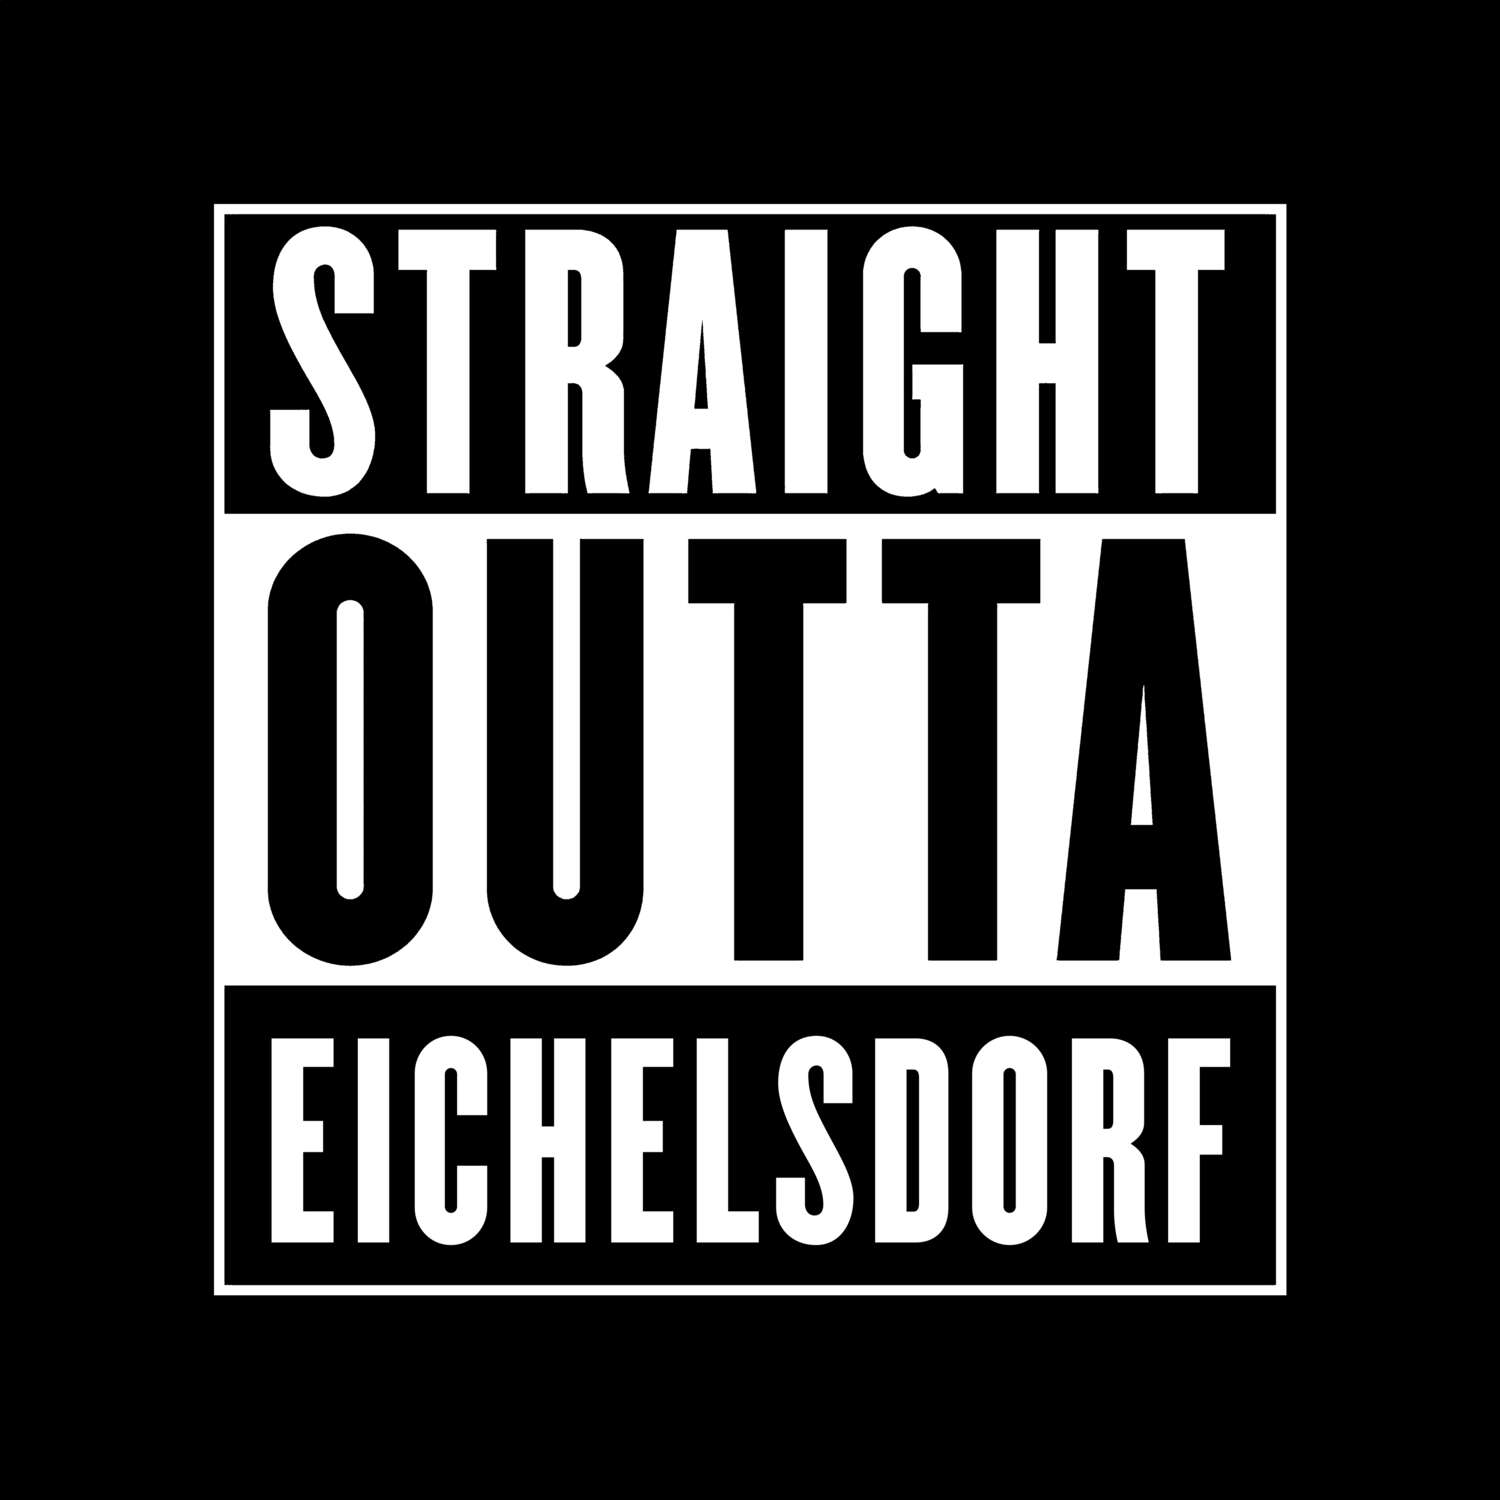 Eichelsdorf T-Shirt »Straight Outta«